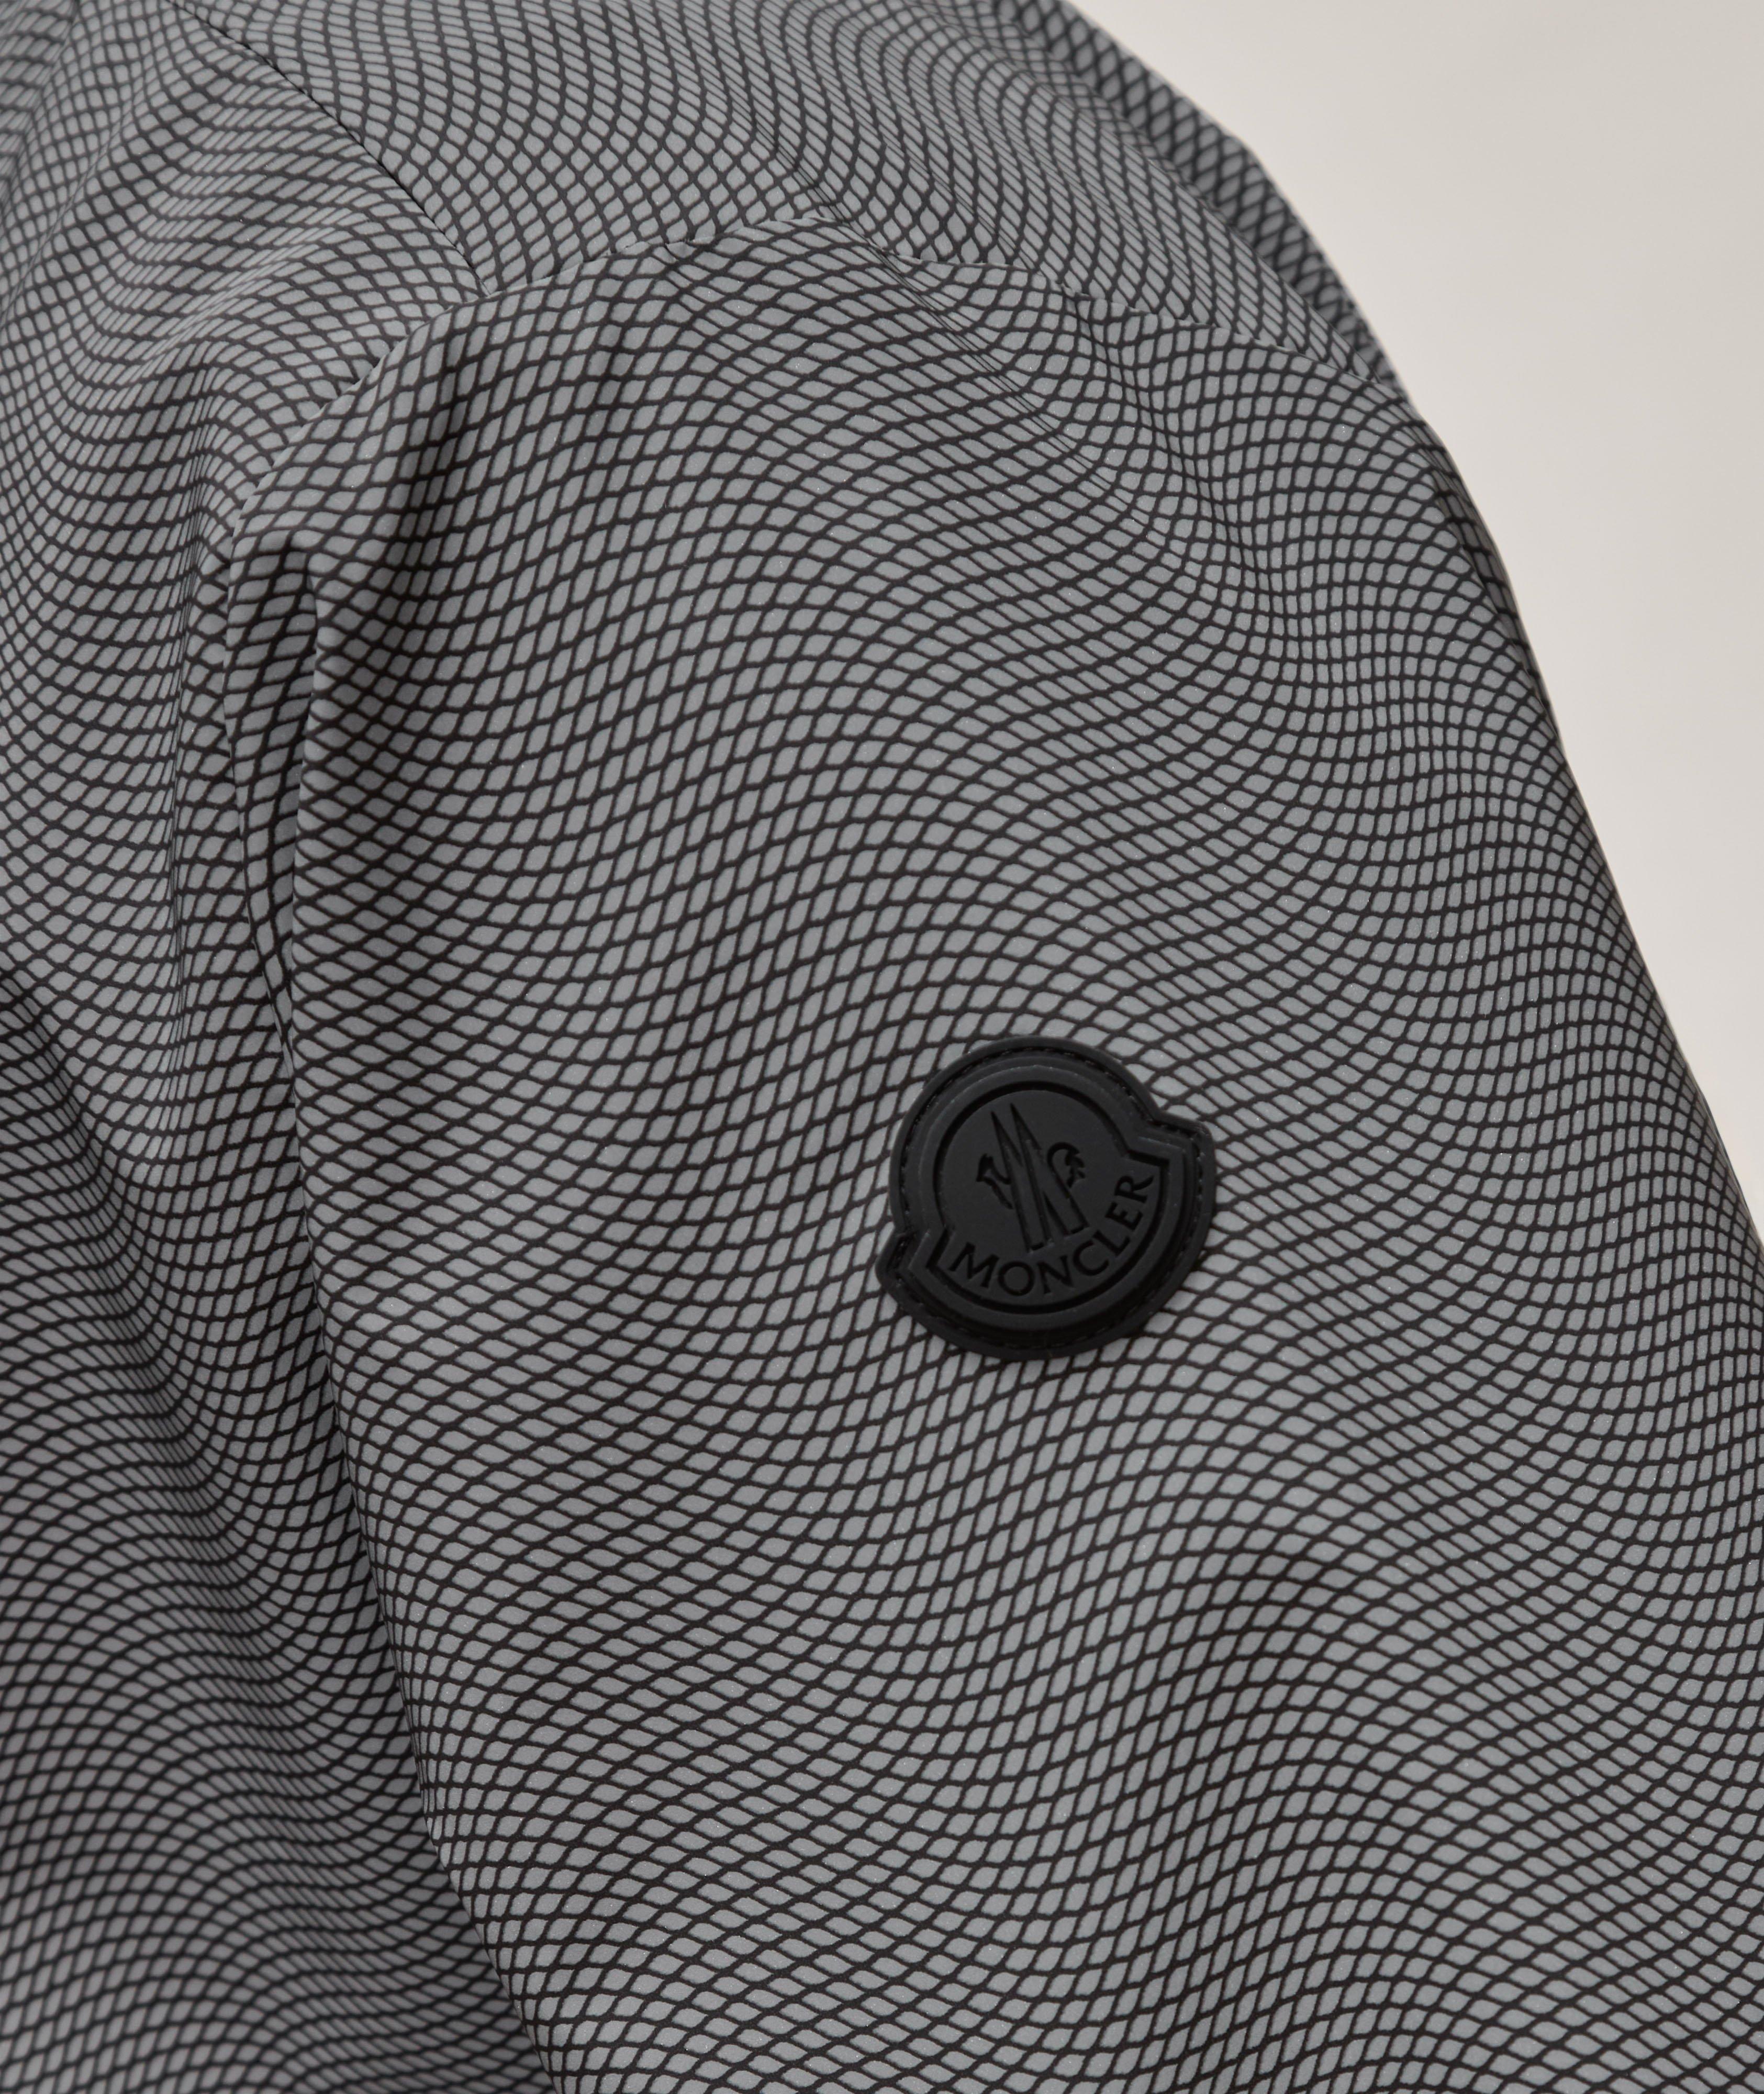 Matt Black Collection Sautron Reflective Jacket